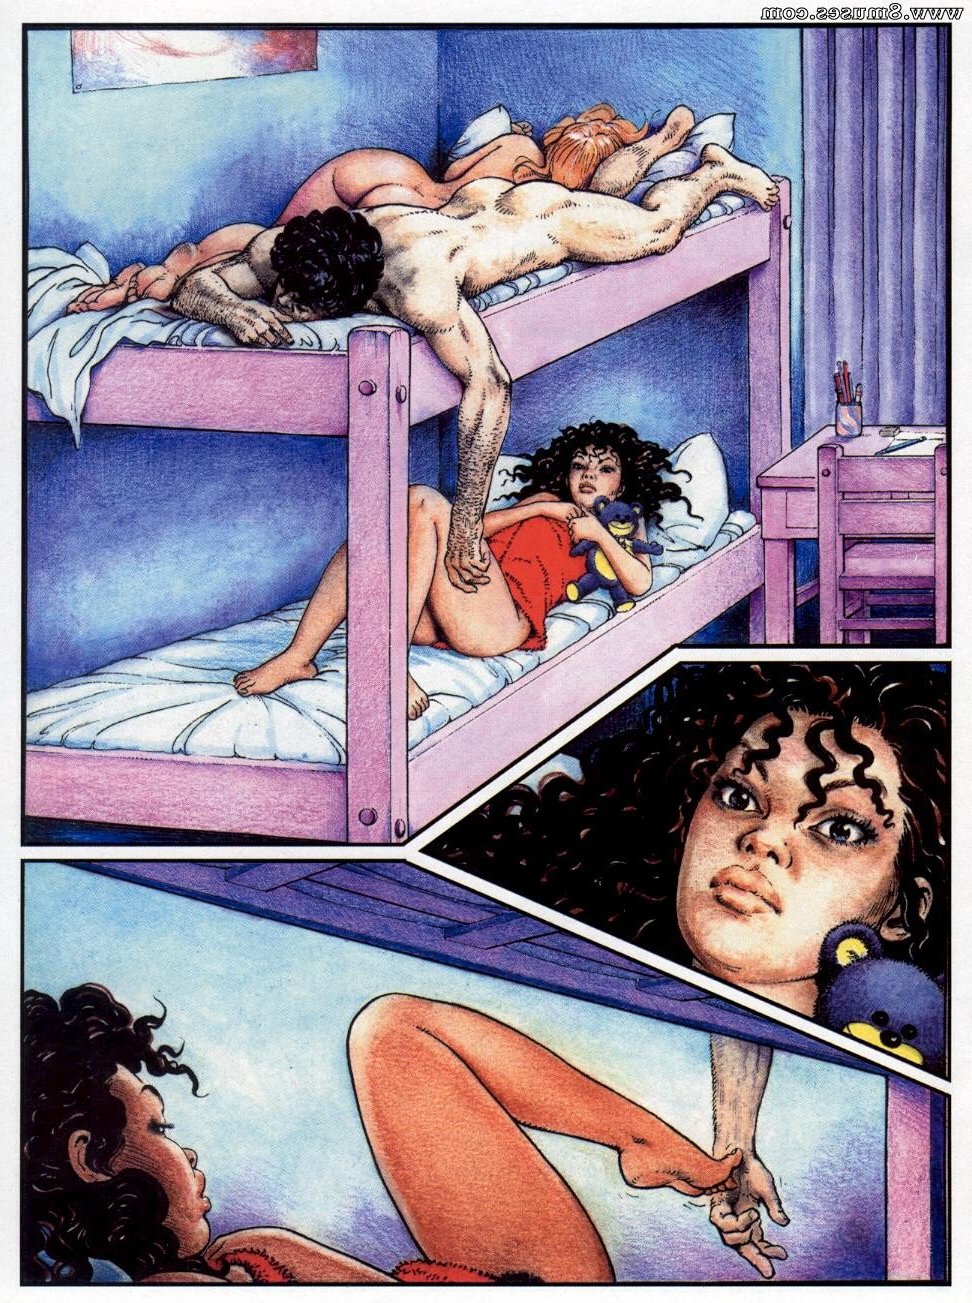 Erotic adult comics online